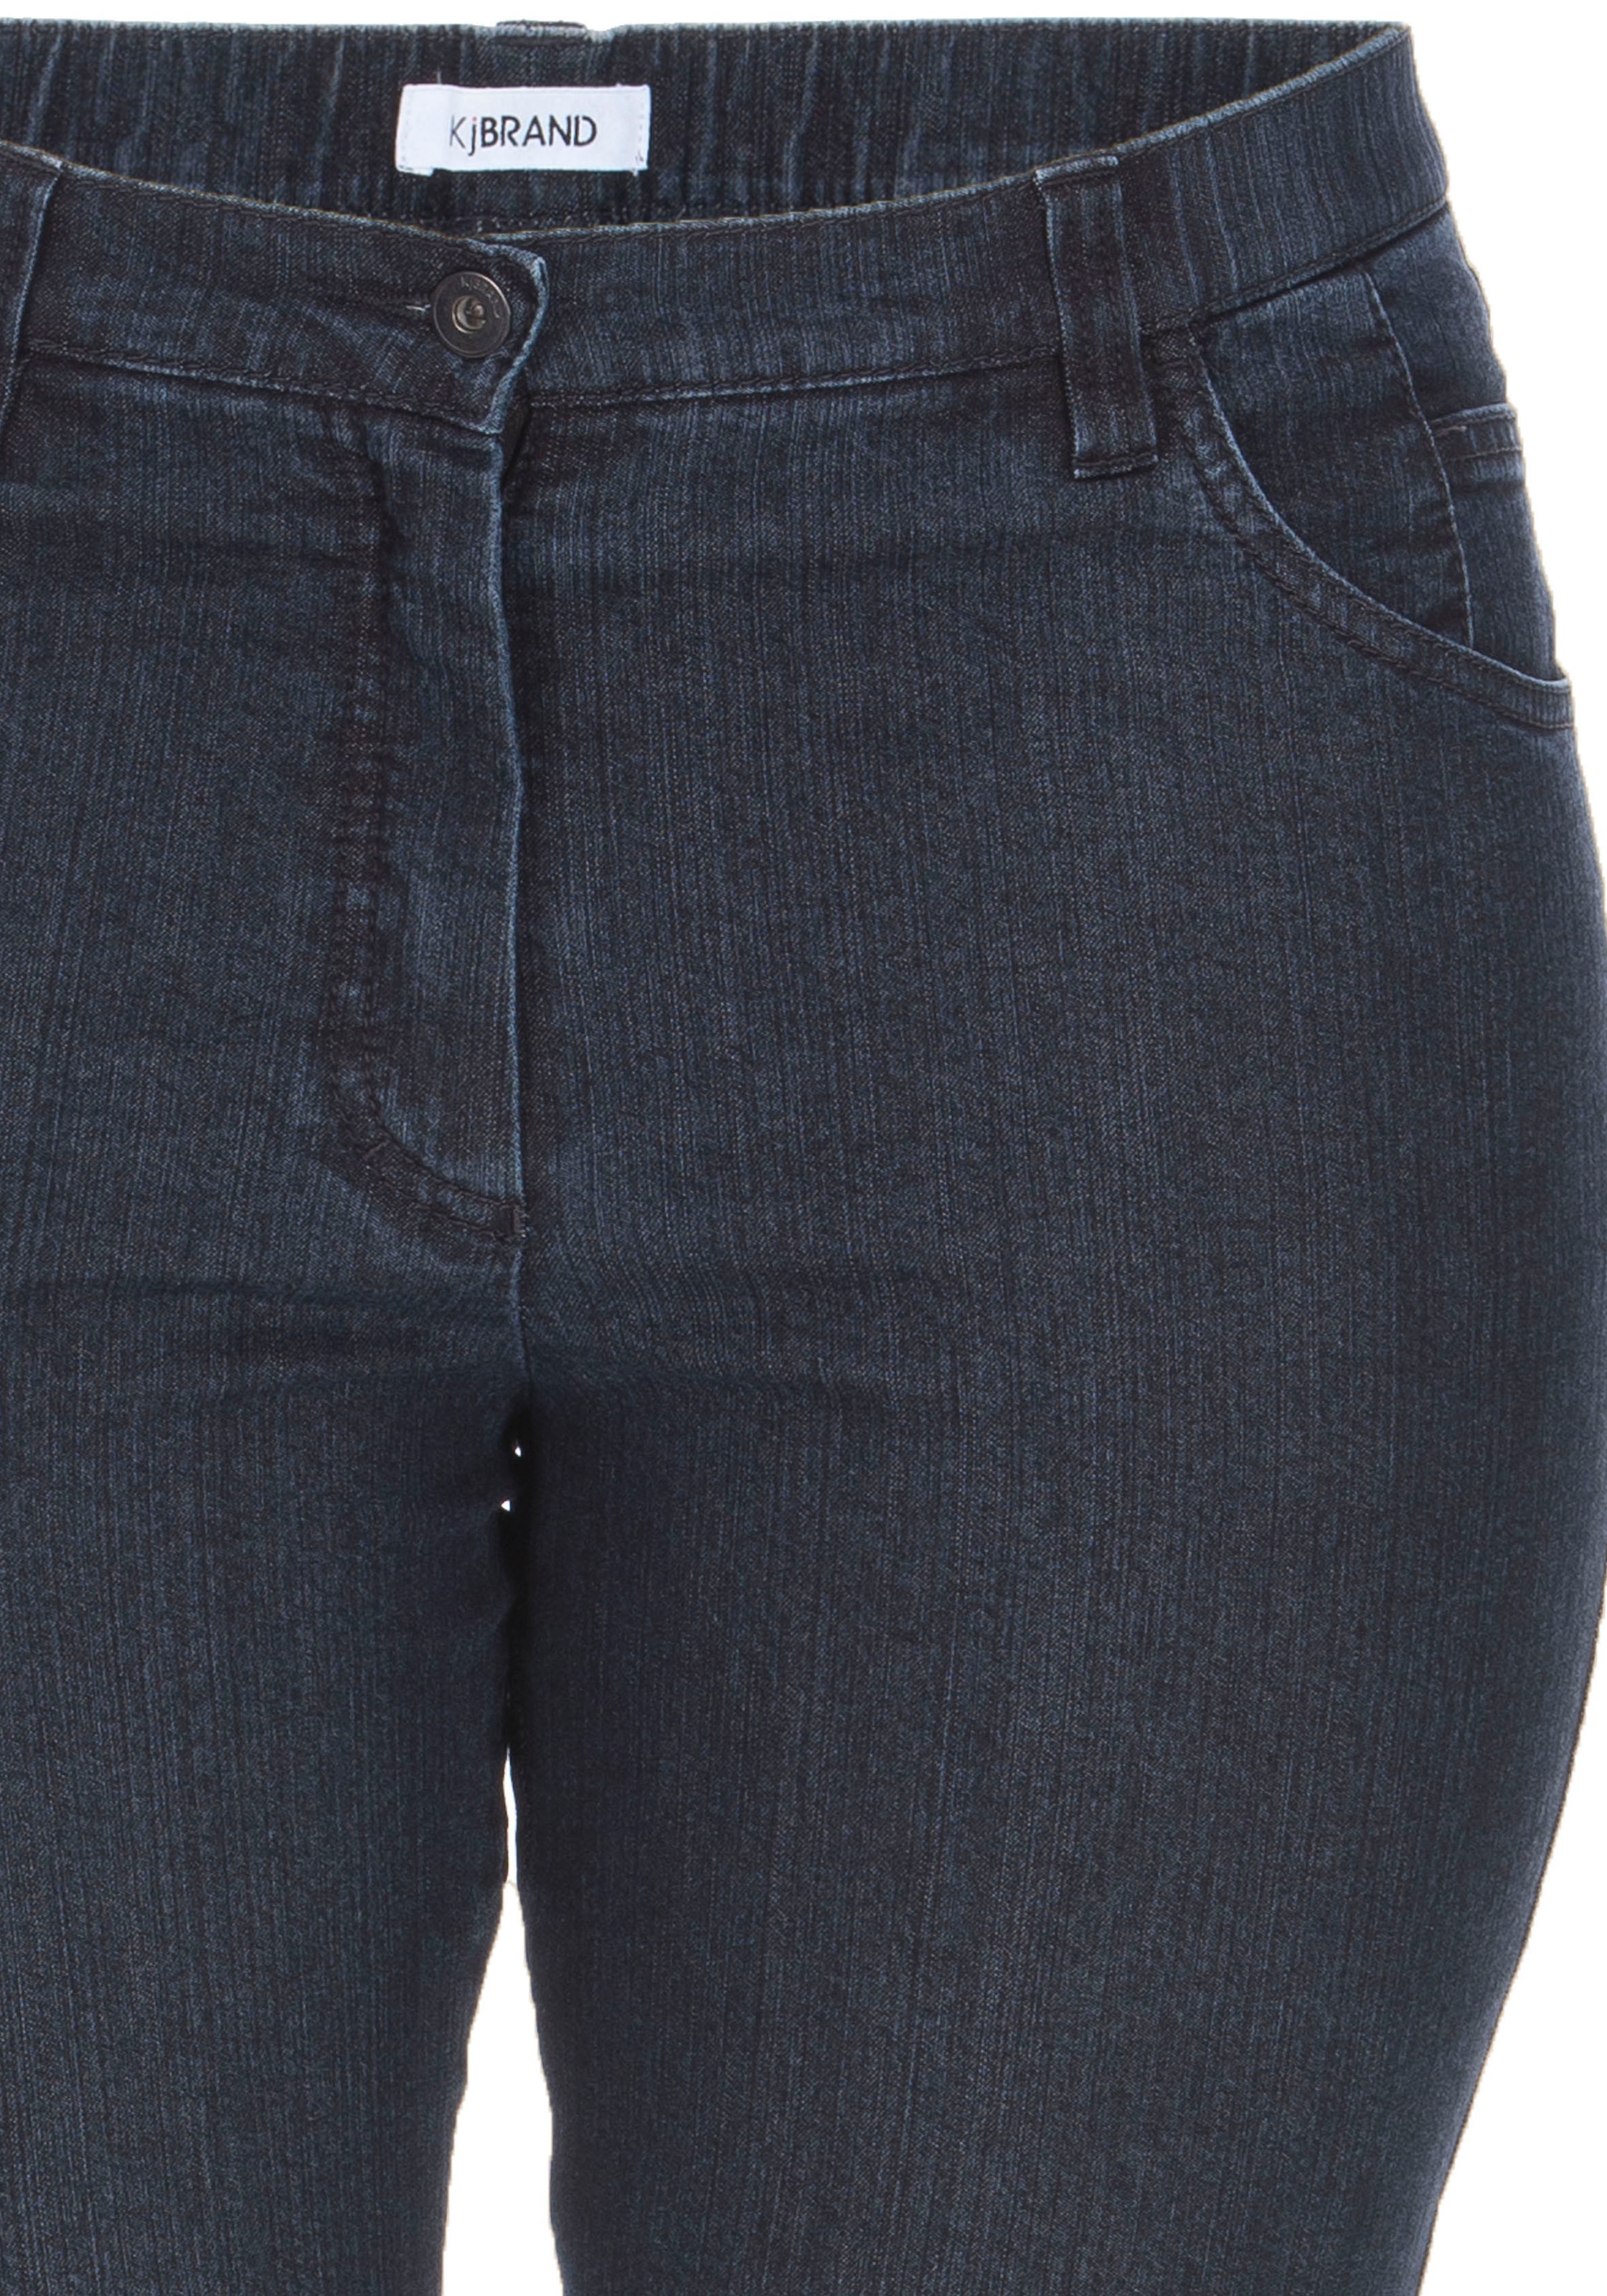 KjBRAND Stretch-Jeans »Betty CS Denim shoppen Stretch«, mit Stretch